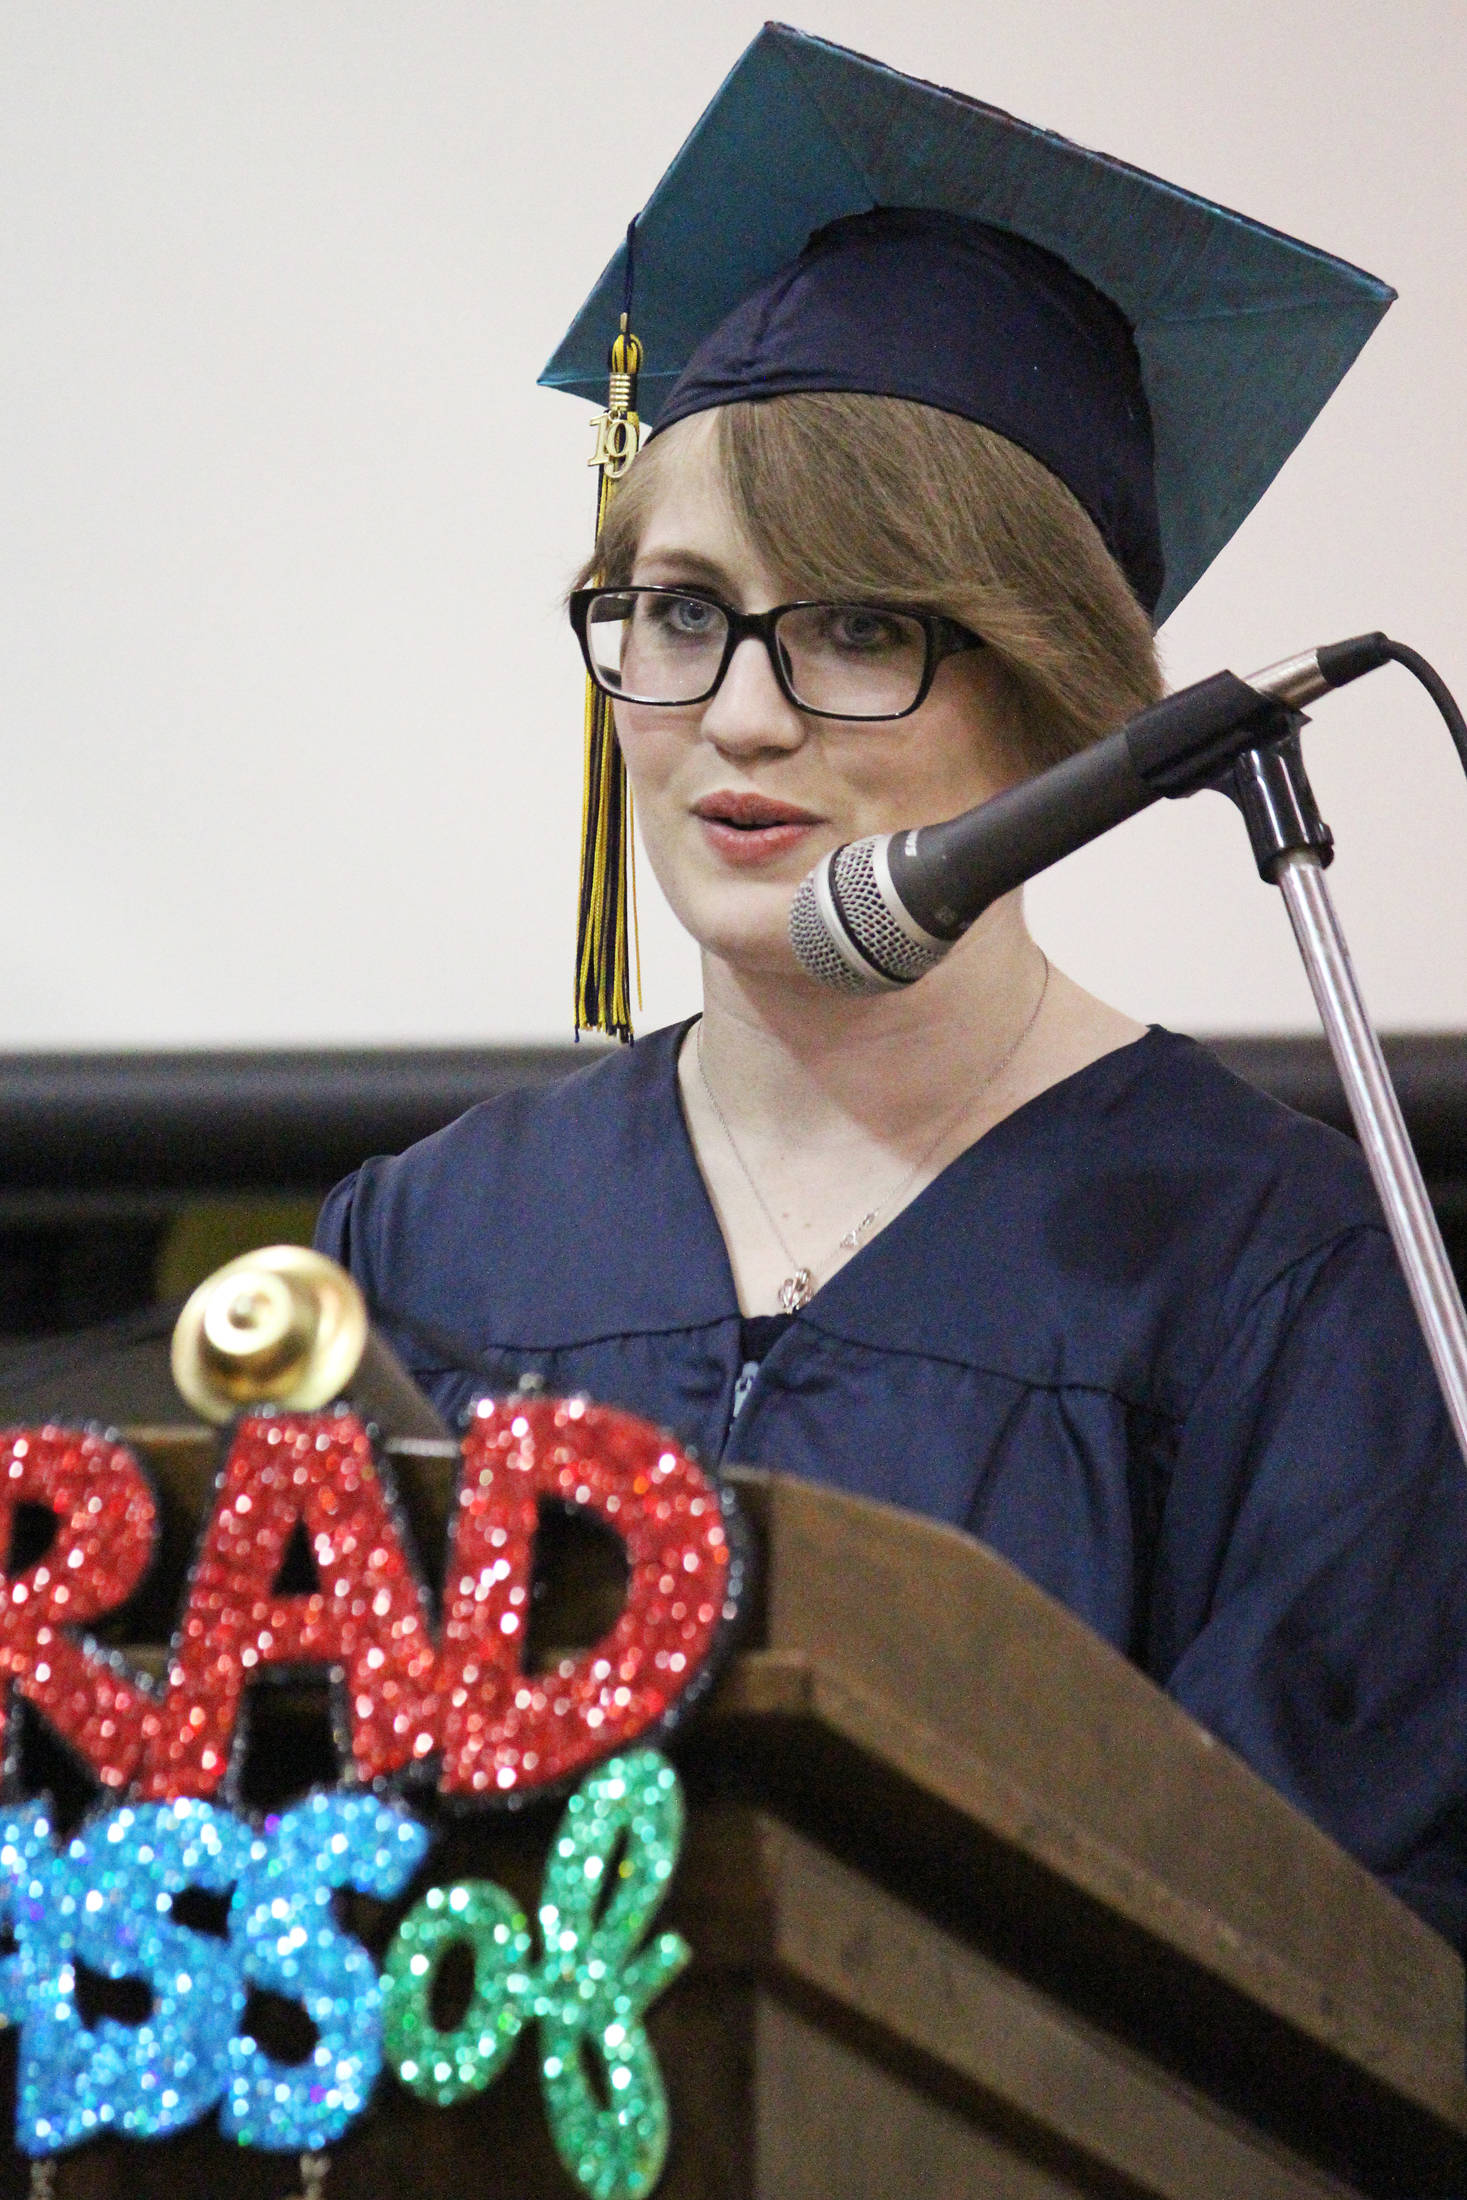 Tala Hadro gives the valedictorian speech at the Ninilchik School graduation ceremony Tuesday, May 21, 2019 at the school in Ninilchik, Alaska. (Photo by Megan Pacer/Homer News)